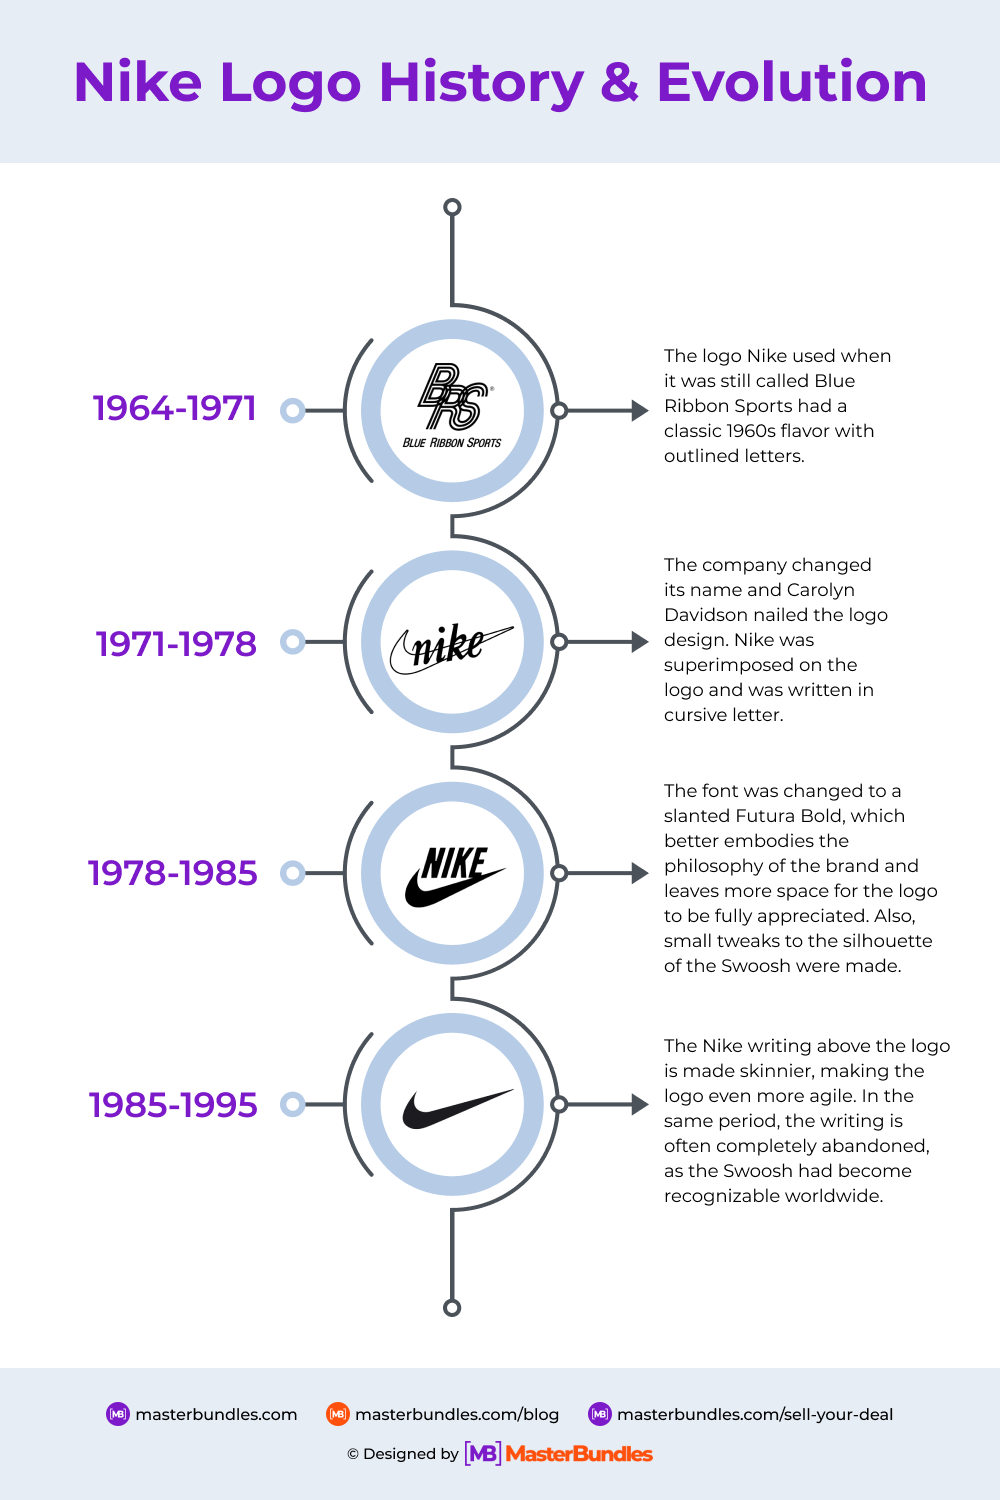 The Nike logo: a history